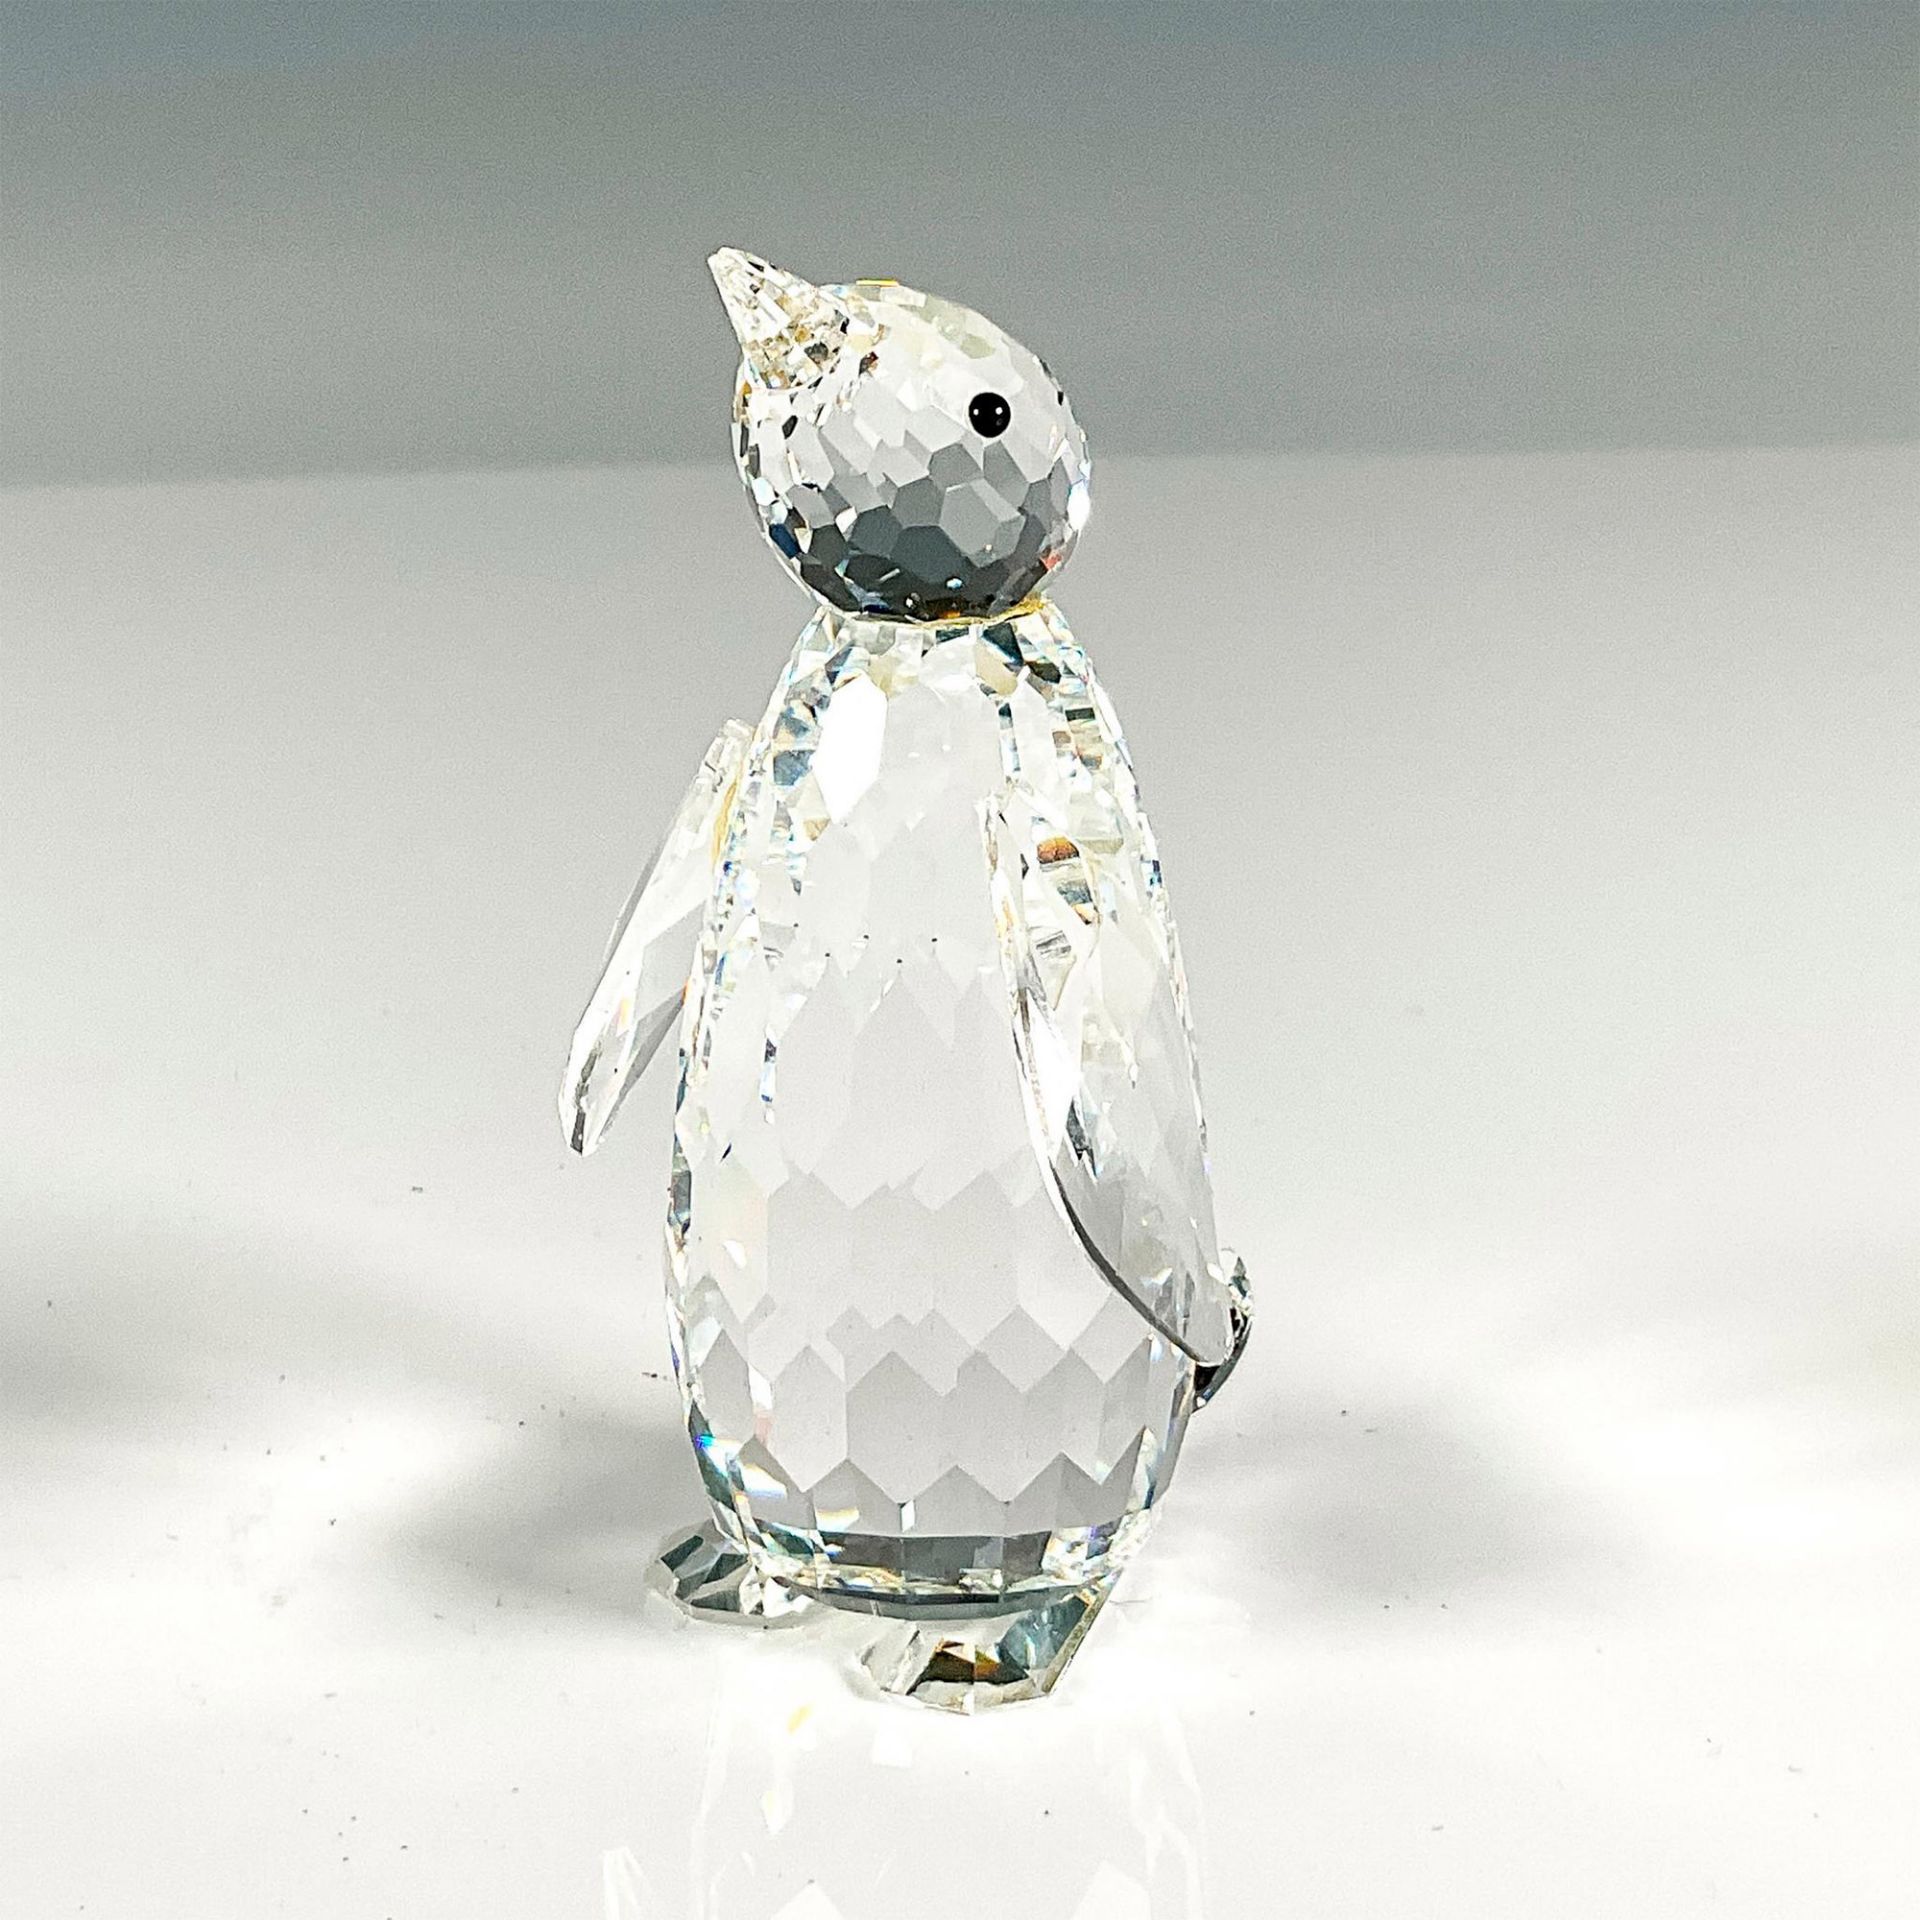 Swarovski Silver Crystal Figurine, Penguin Large